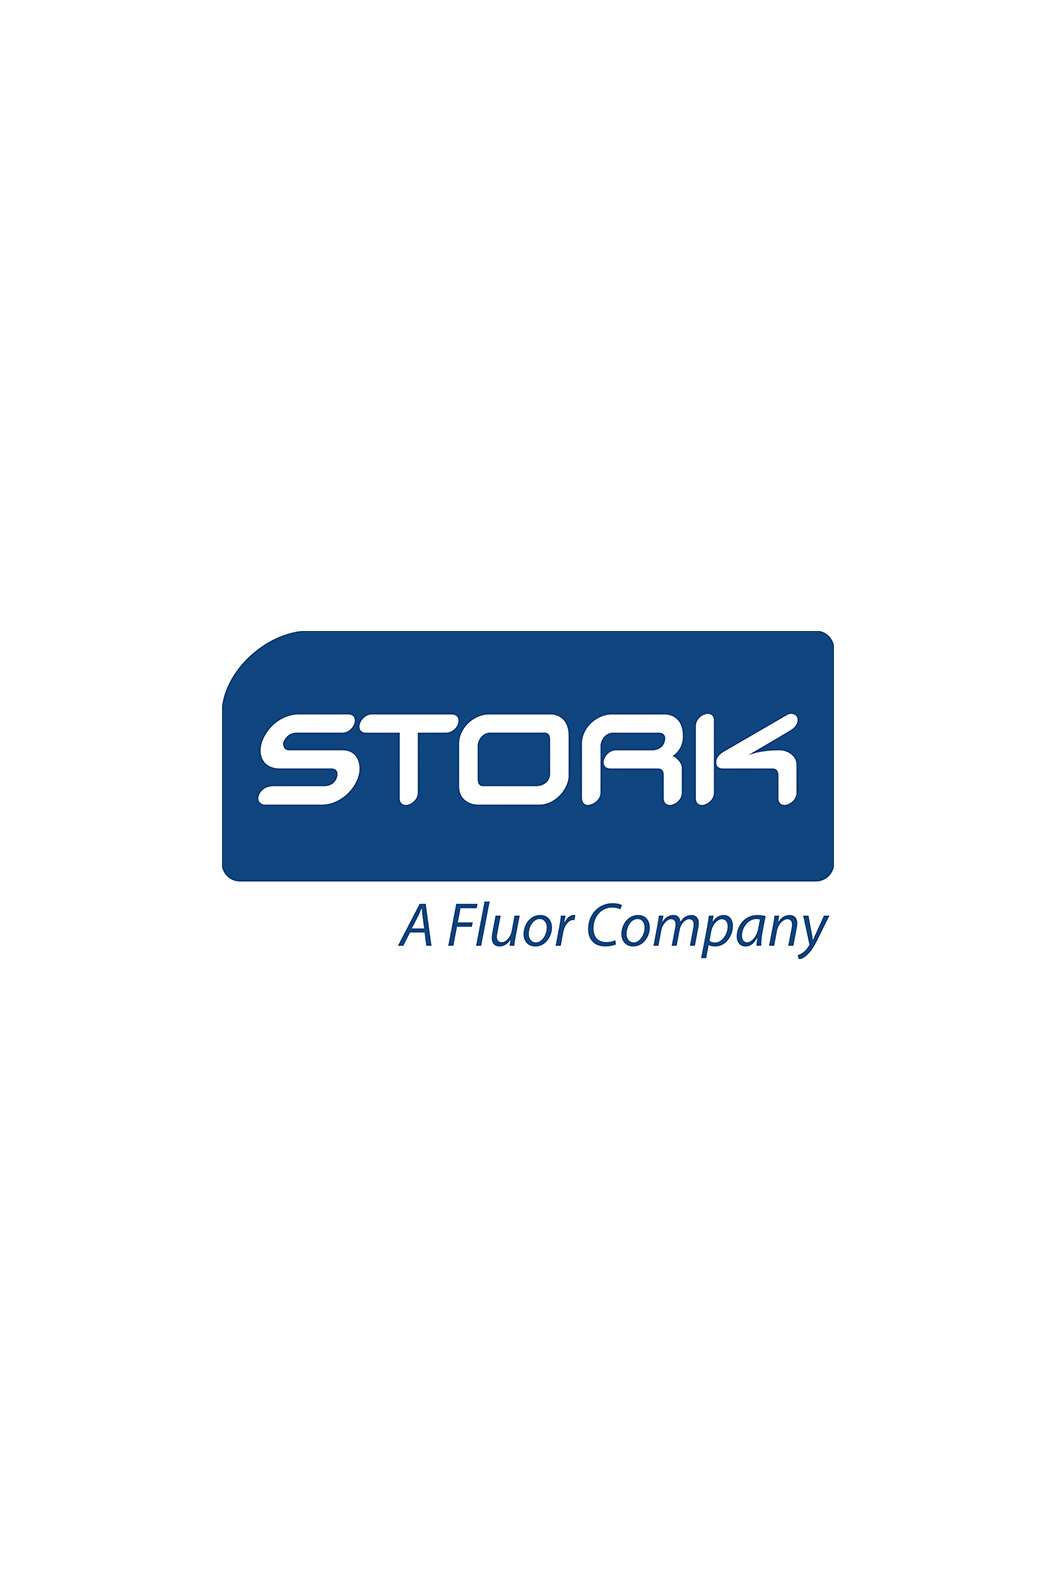 Stork wins prestigious ‘Safety Innovations’ award